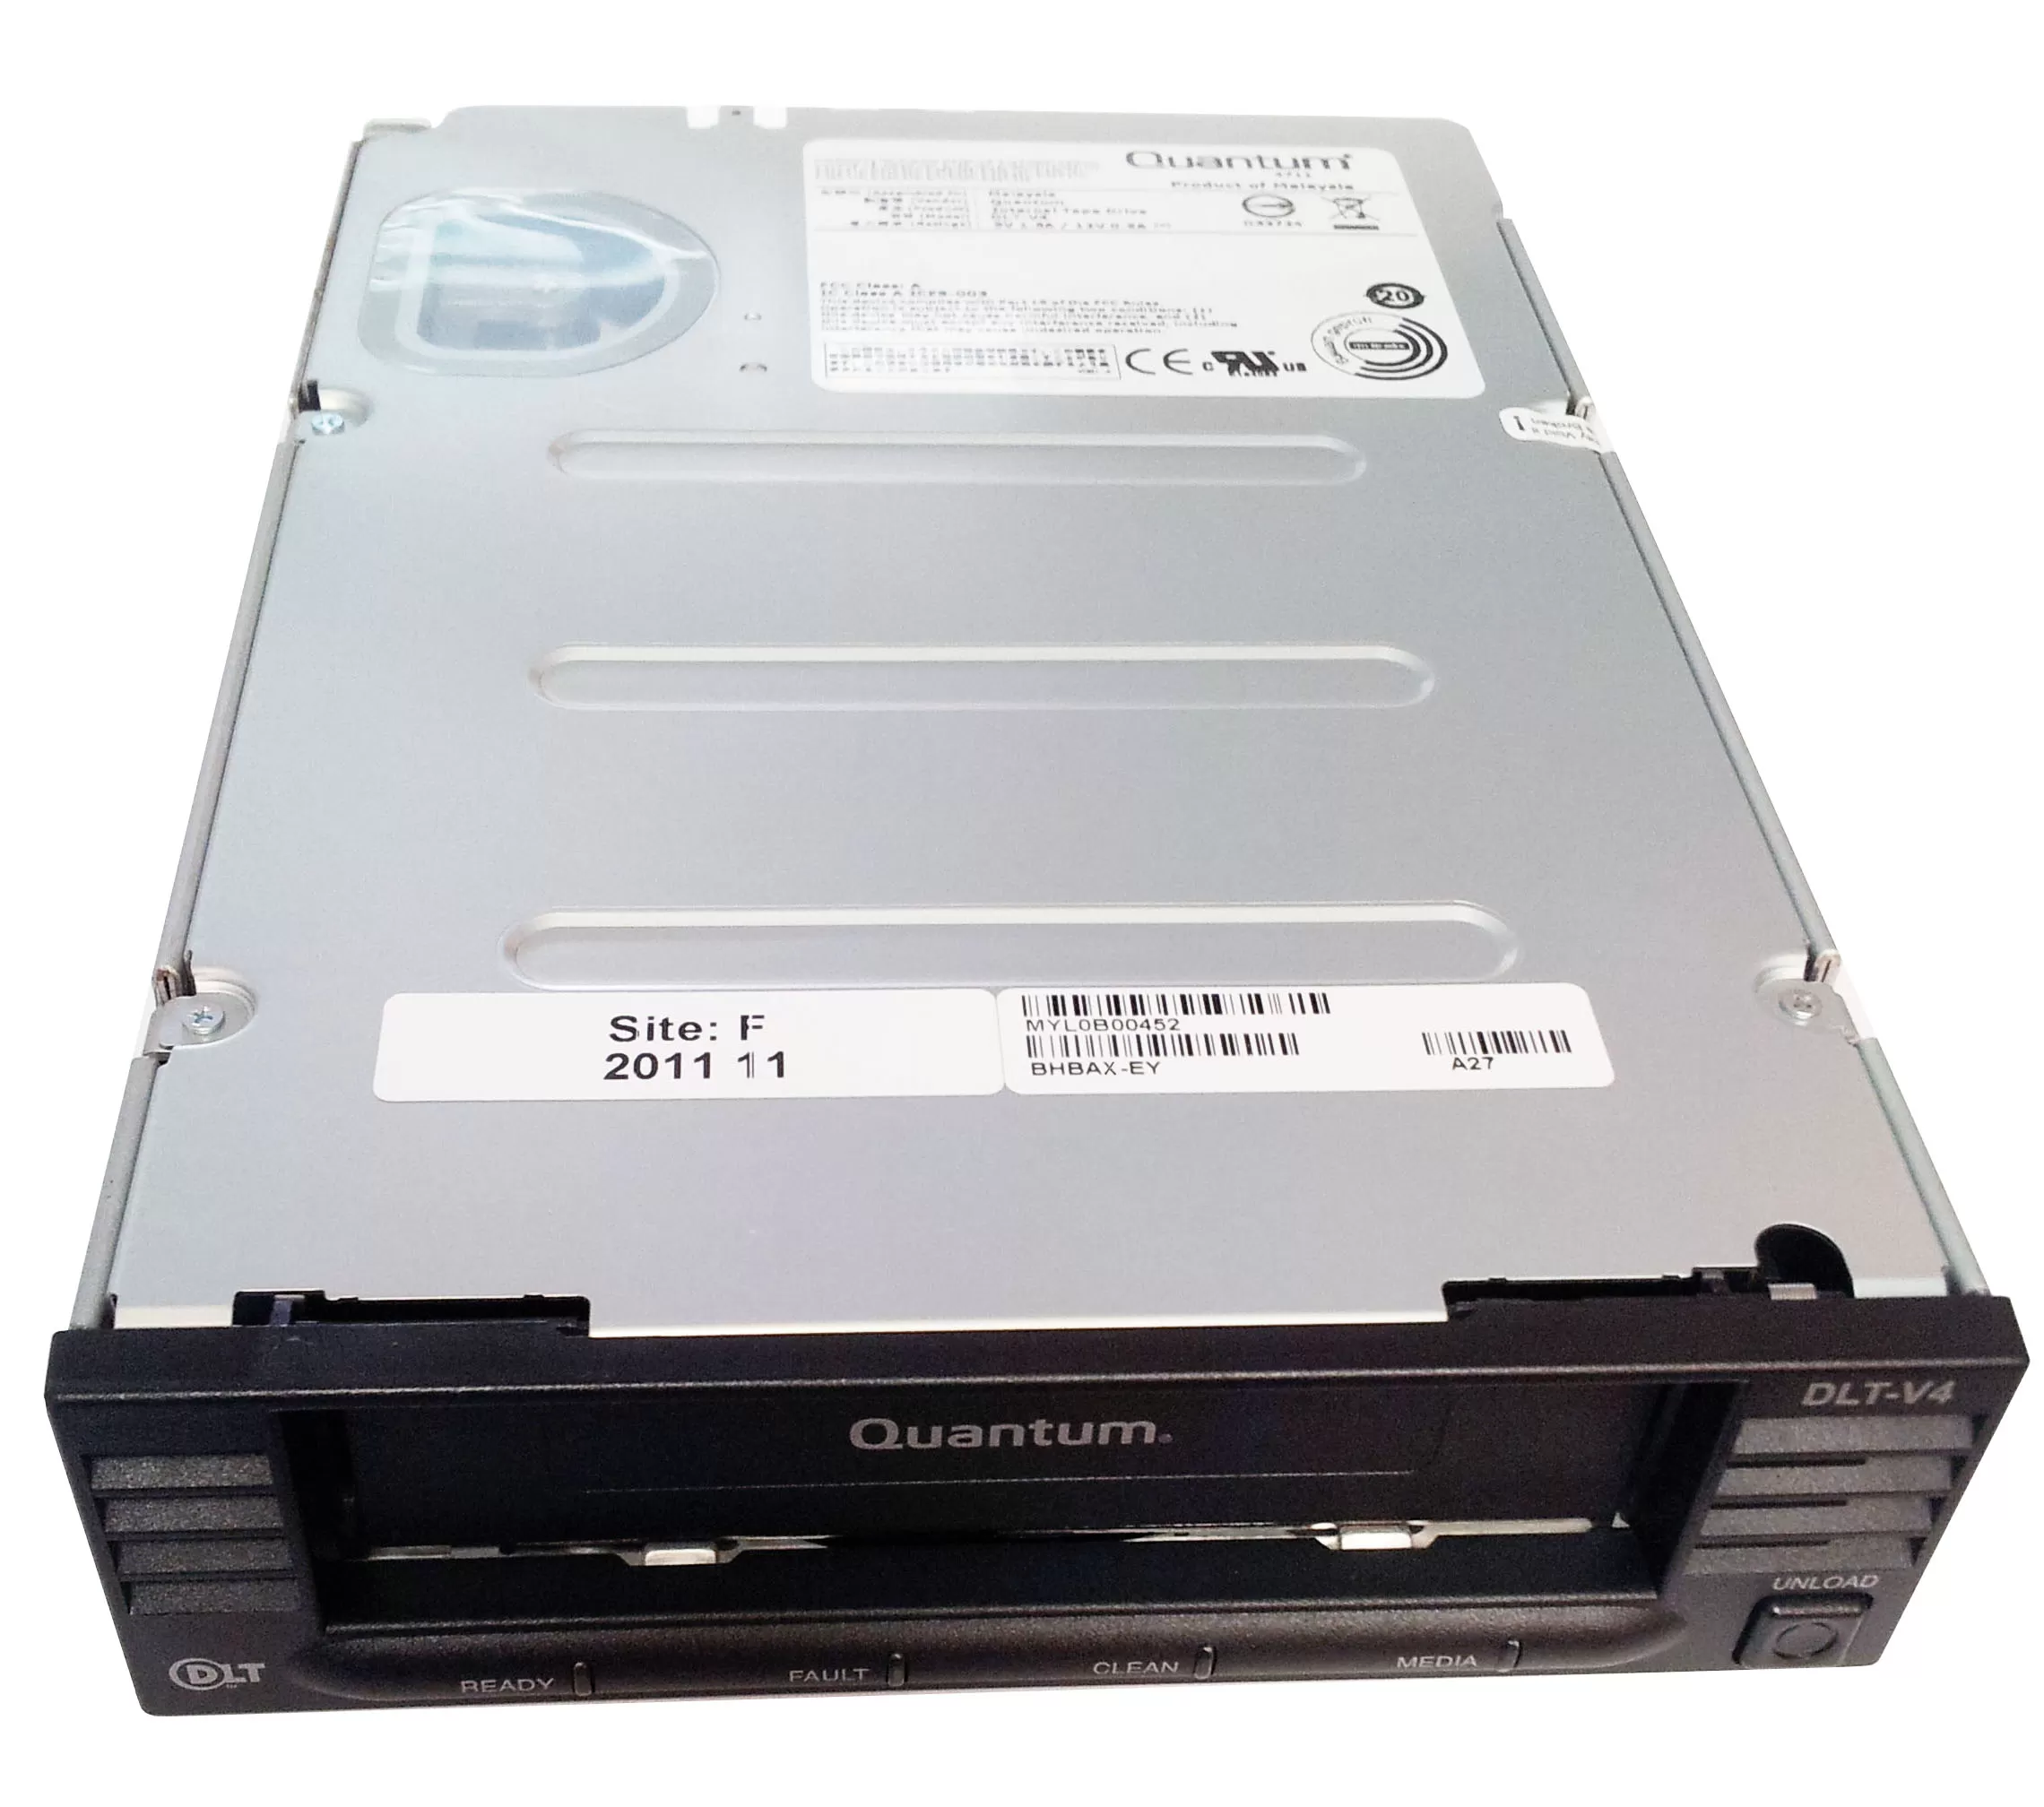 Quantum DLT-V4 BHBAX-BR 160/320 GB SCSI INTERNAL TAPE DRIVE 